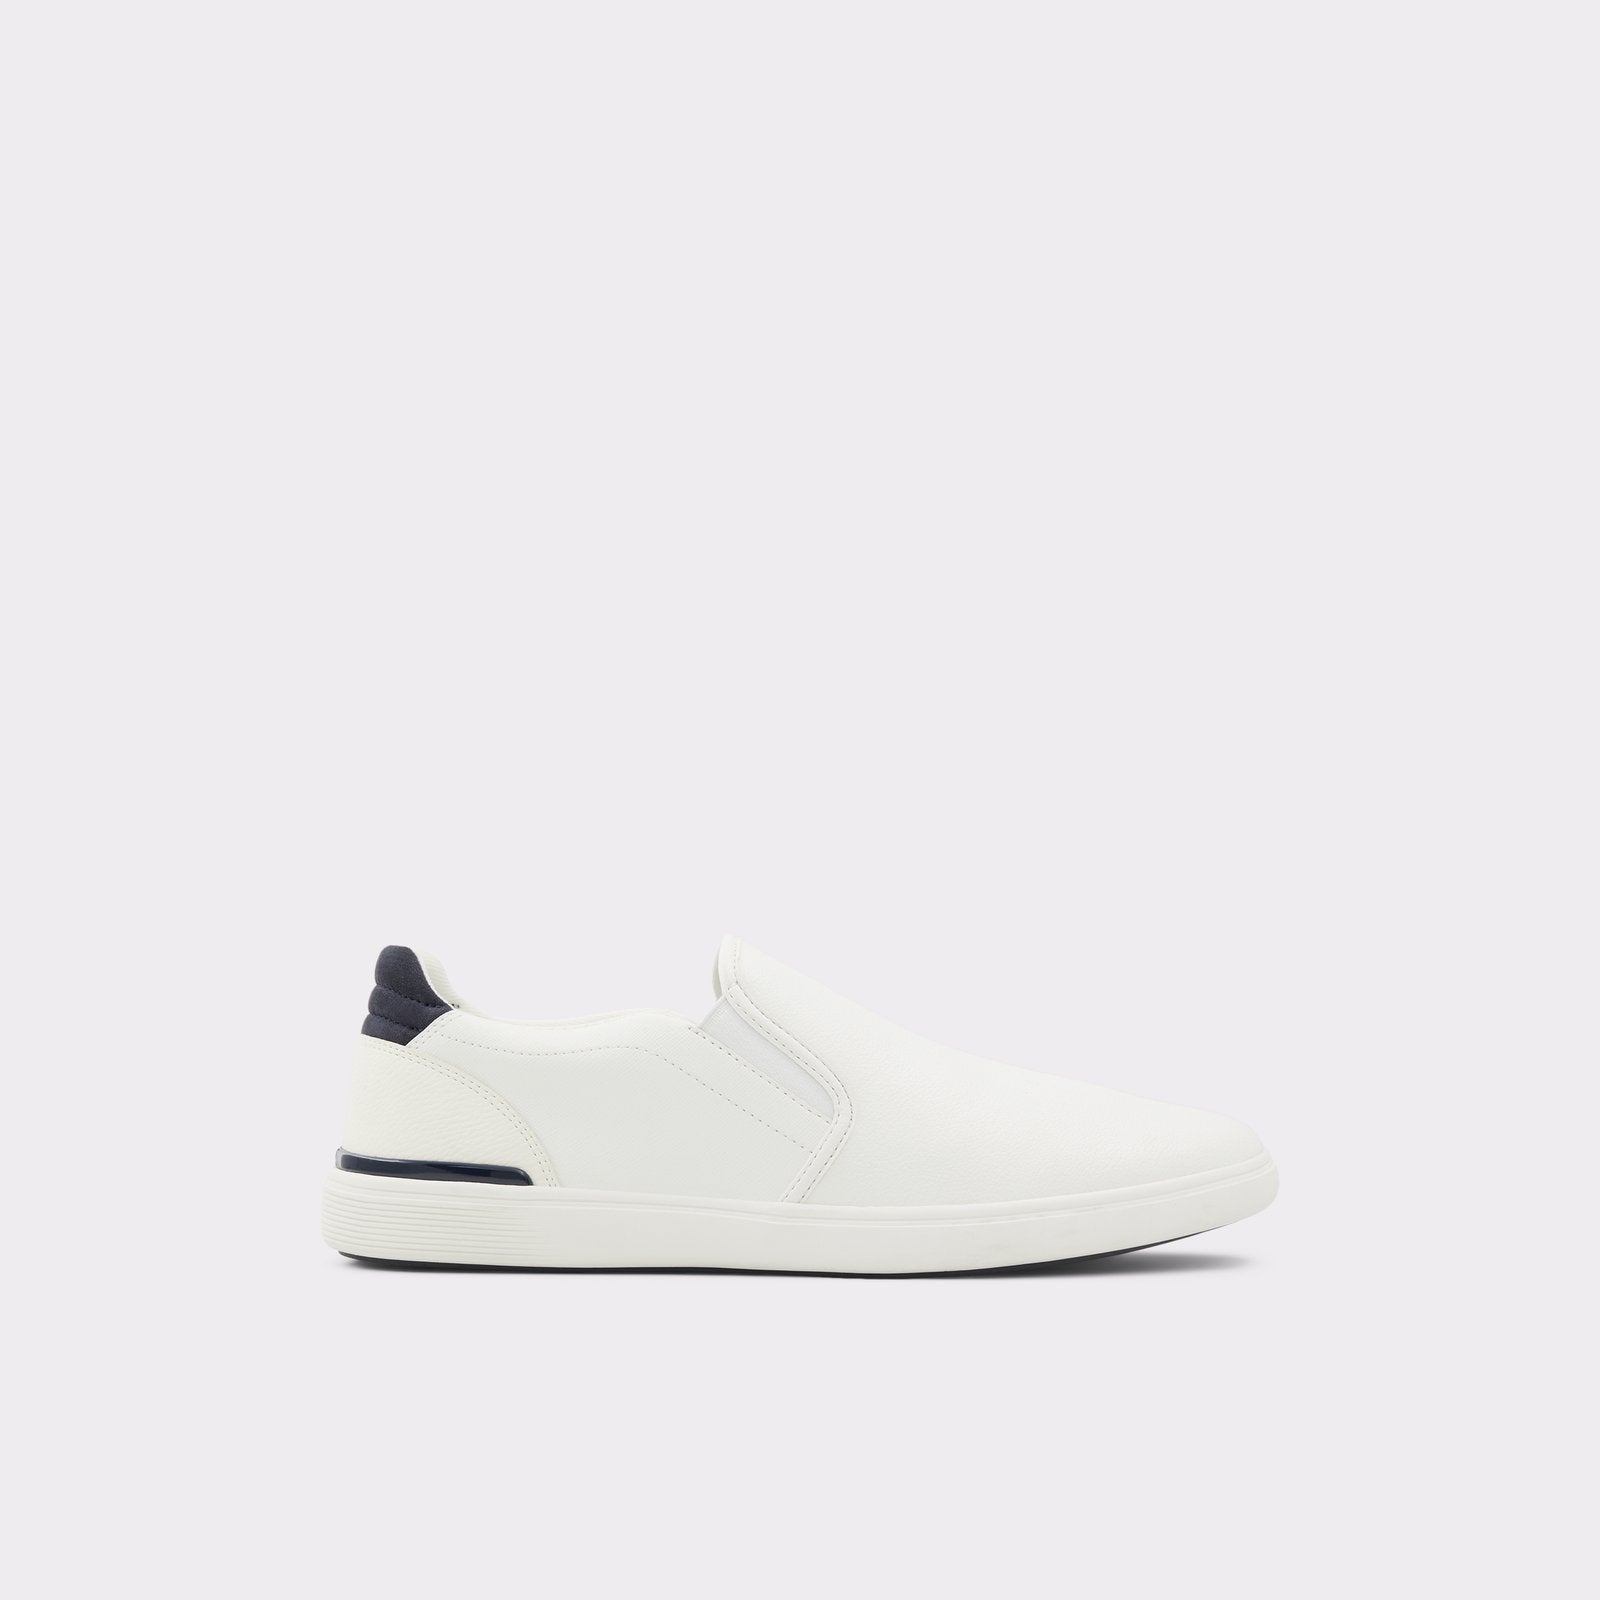 Aldo Men’s Slip On Shoes Saredon (White)